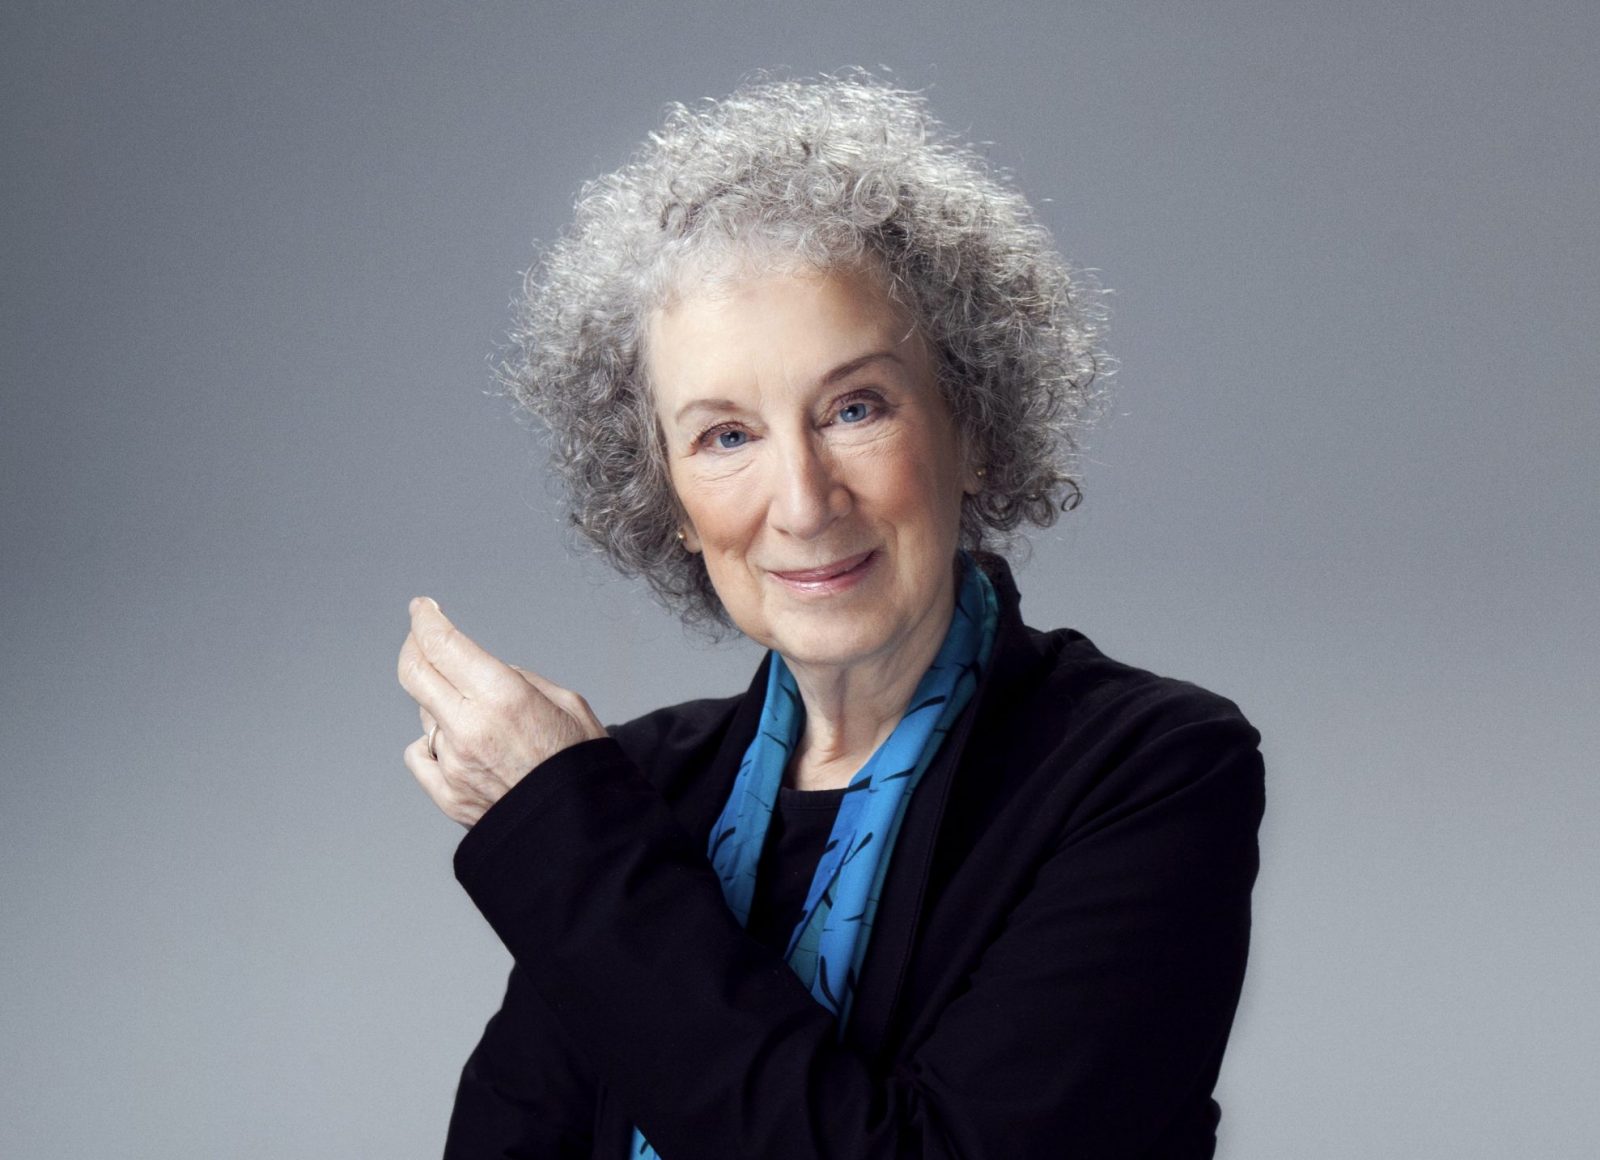 SDG Library to host Margaret Atwood Nov. 17